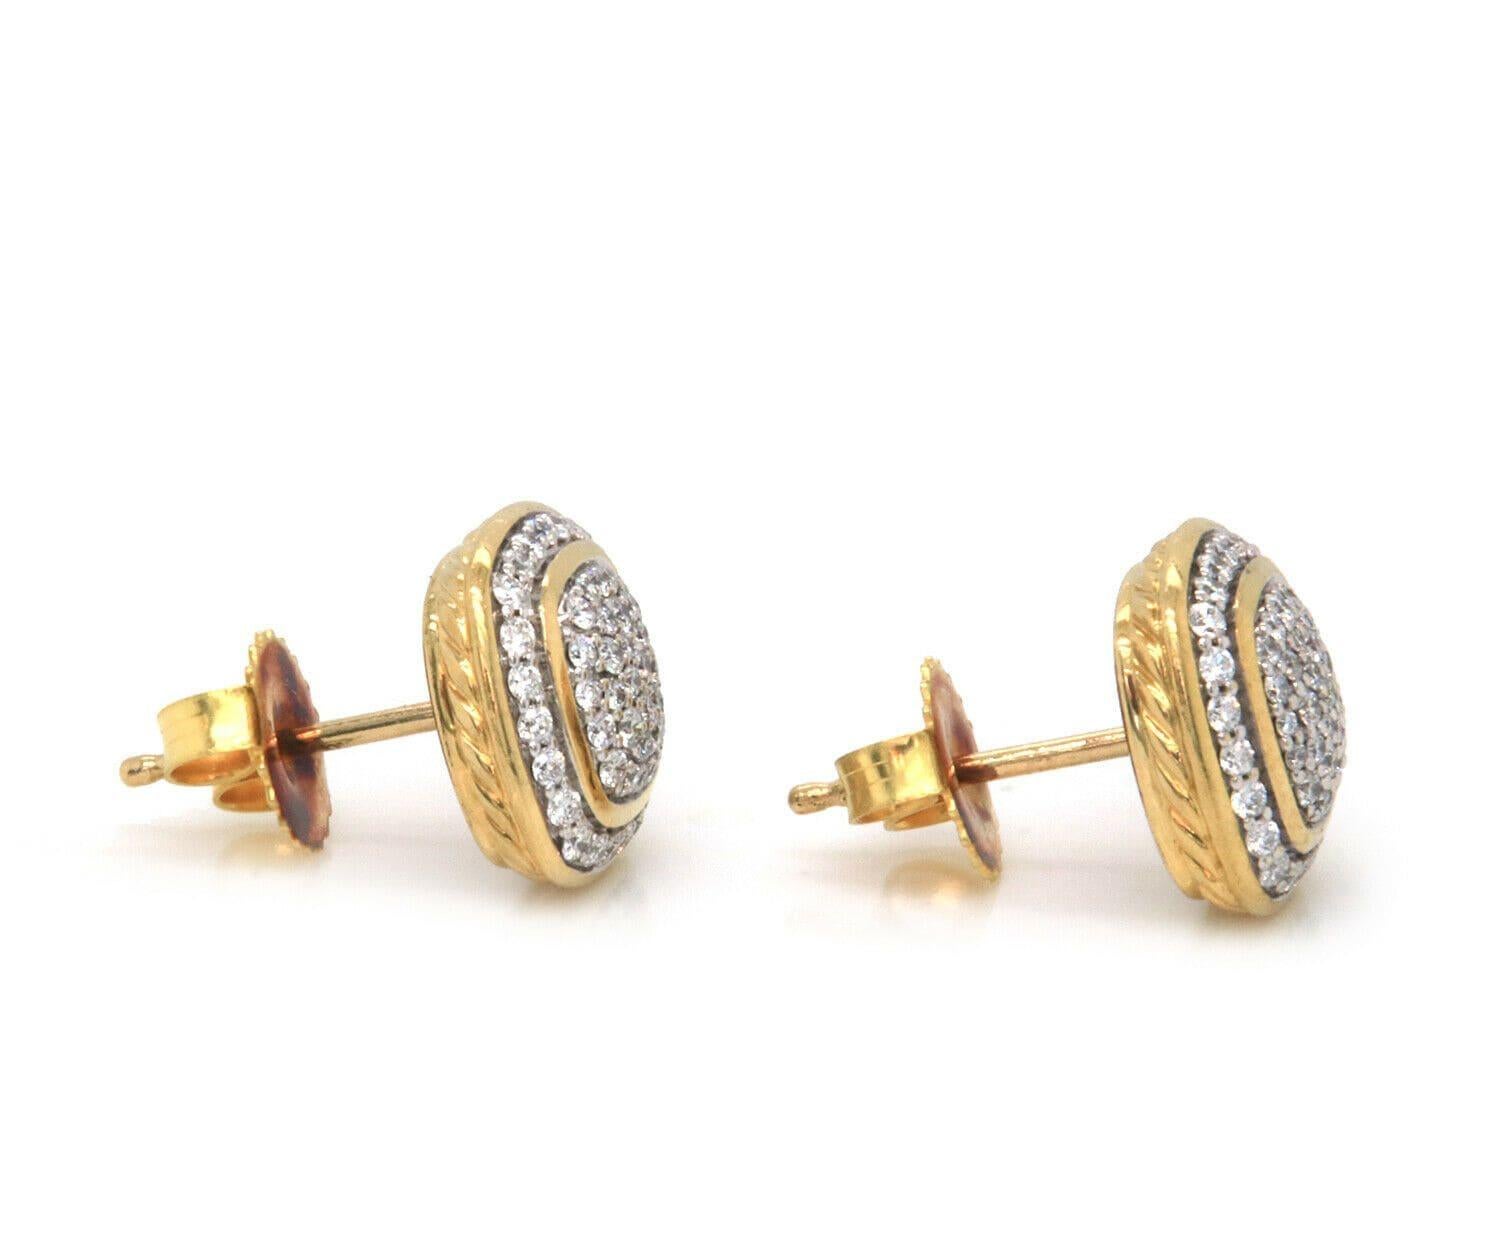 David Yurman Albion Pave Diamond Earrings in 18K

David Yurman Albion Pave Diamond Earrings
18K Yellow Gold
Diamonds Carat Weight: Approx. 0.55ctw
Earring Diameter: Approx. 11.0 X 11.0 MM
Weight: Approx. 6.50 Grams
Stamped: ©D.Y.,